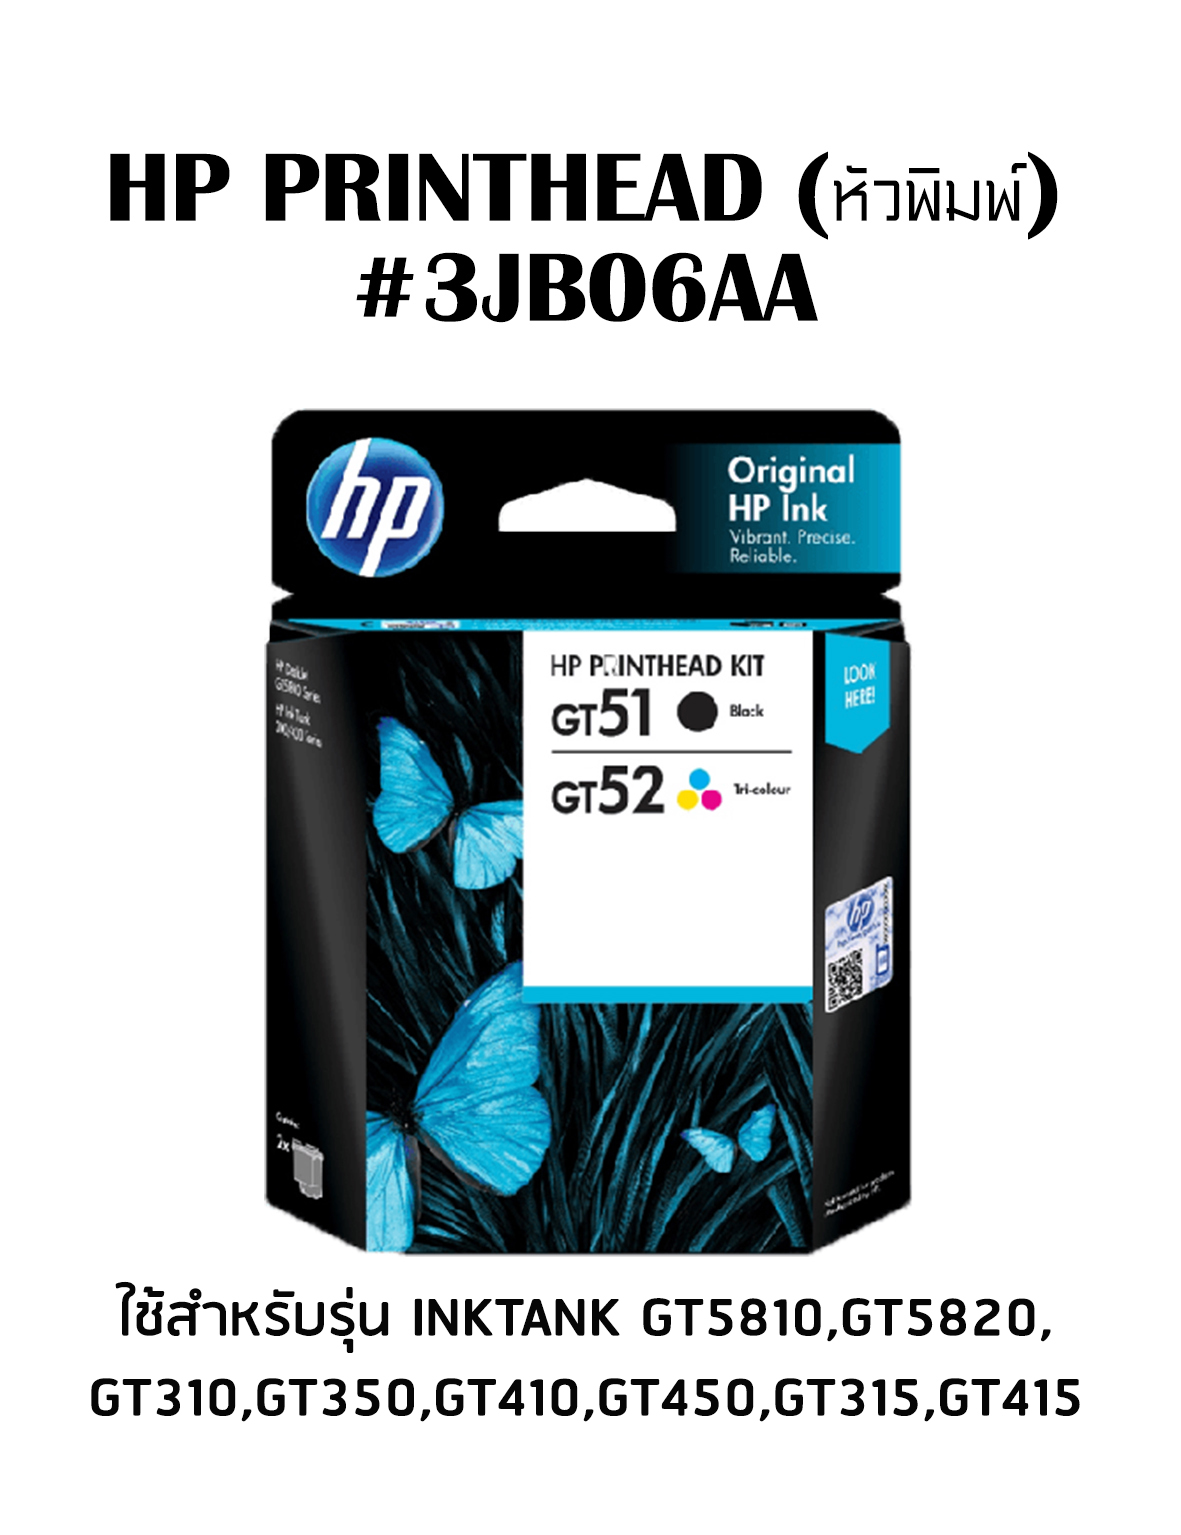 HP PRINTHEAD GT51/GT52 (หัวพิมพ์) #3JB06AA ใช้สำหรับรุ่น INKTANK GT5810,GT5820,GT310,GT350,GT410,GT450,GT315,GT415